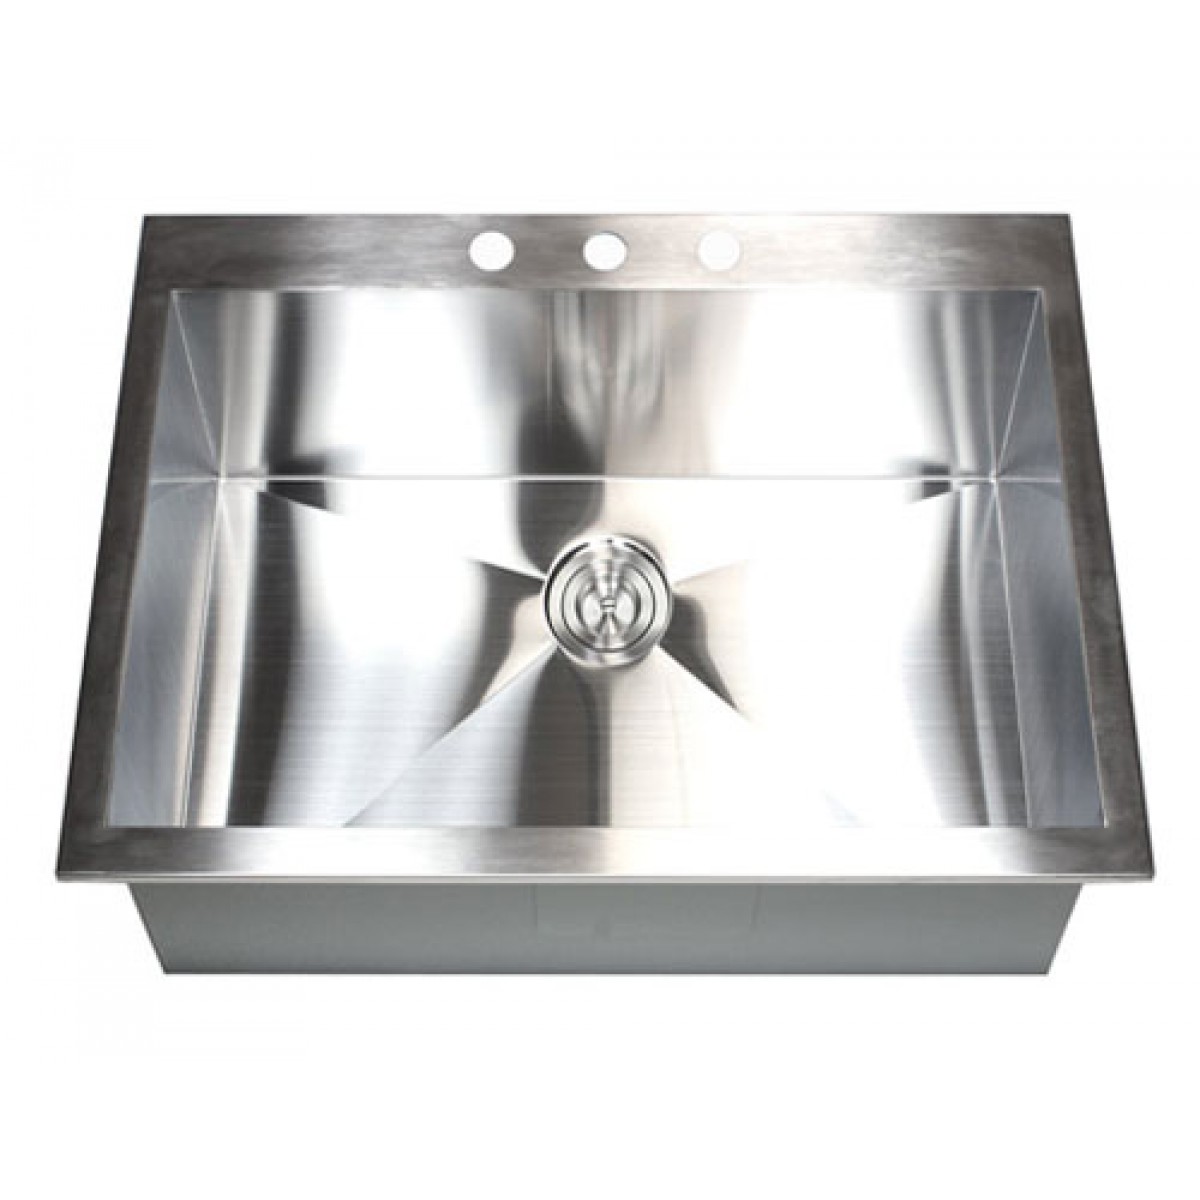 25 Inch Top Mount Drop In Stainless Steel Single Bowl Kitchen Sink Zero Radius Design